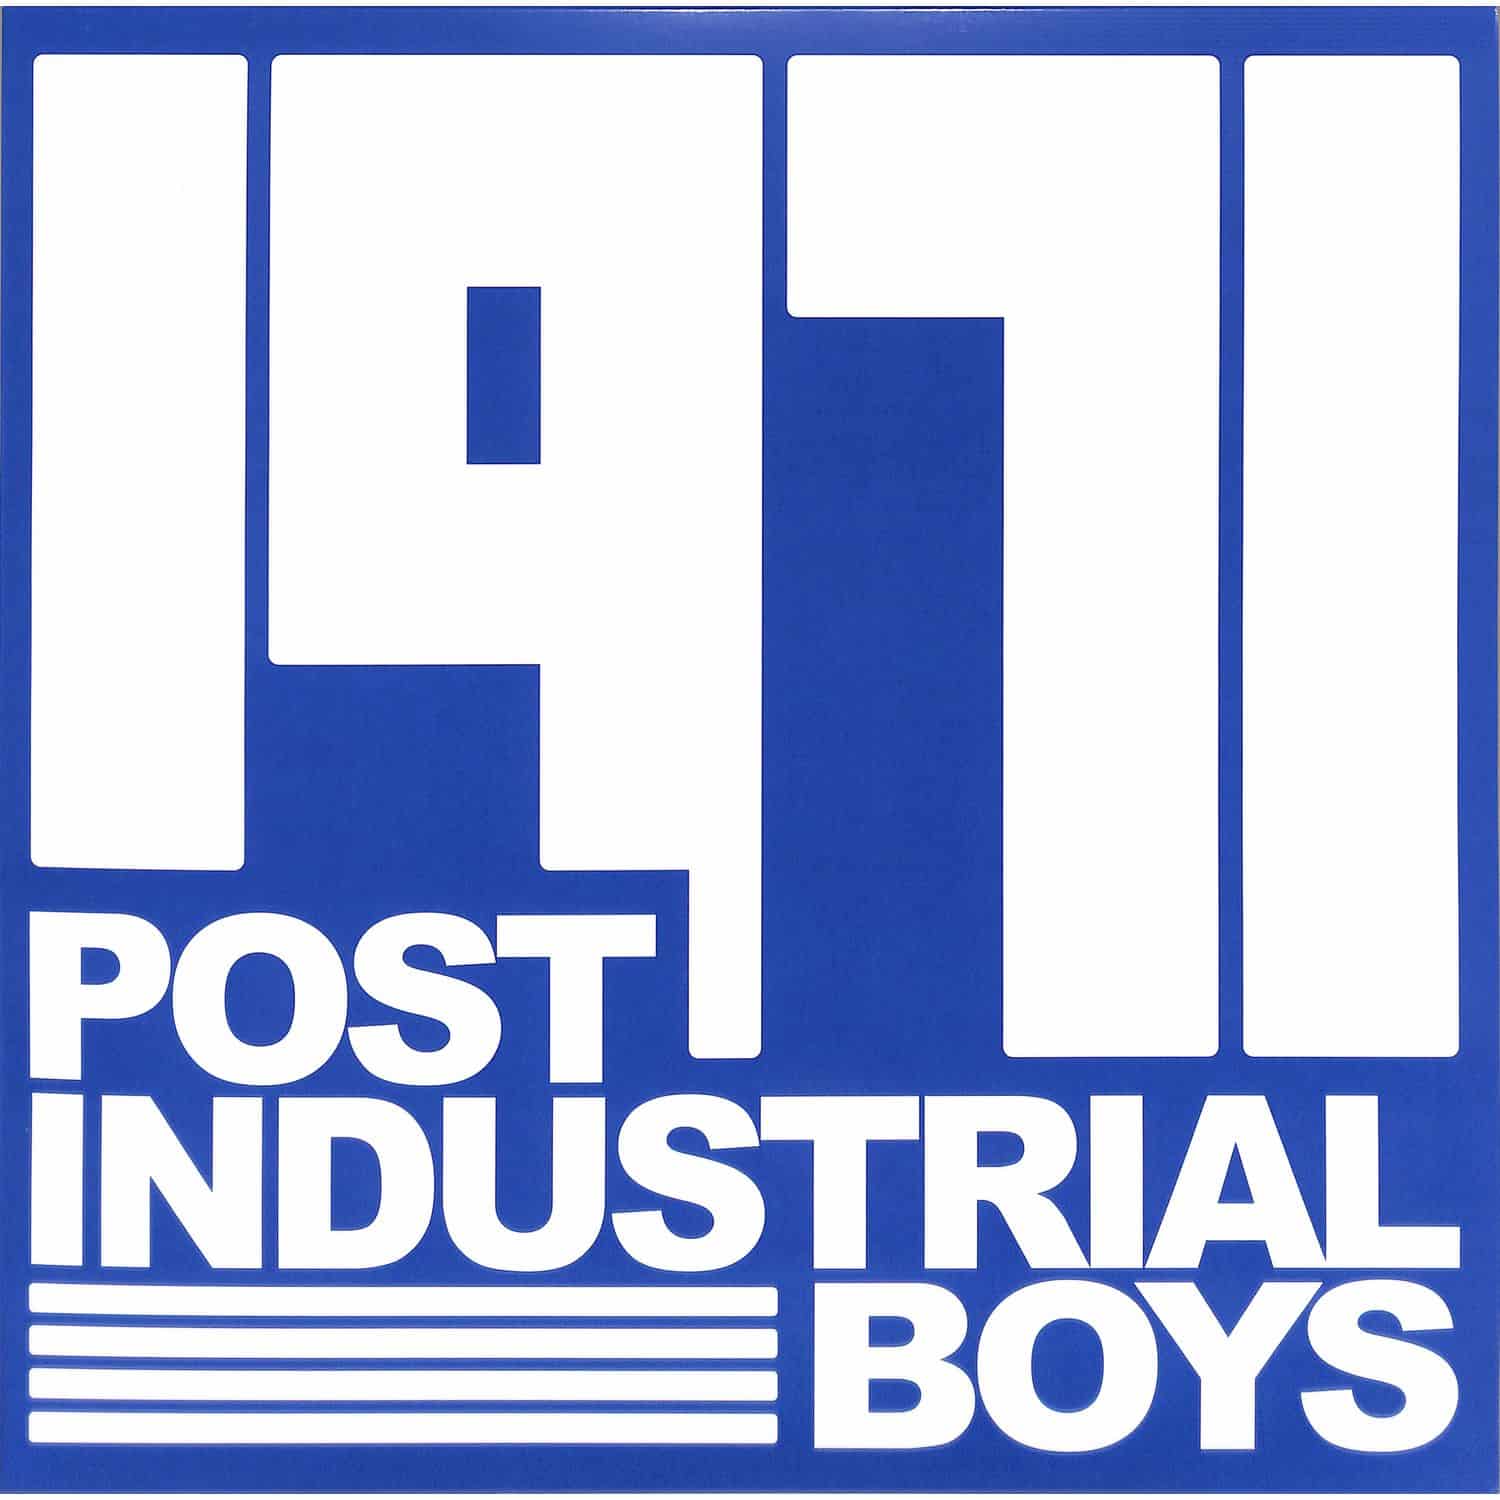 Post Industrial Boys - 1971 